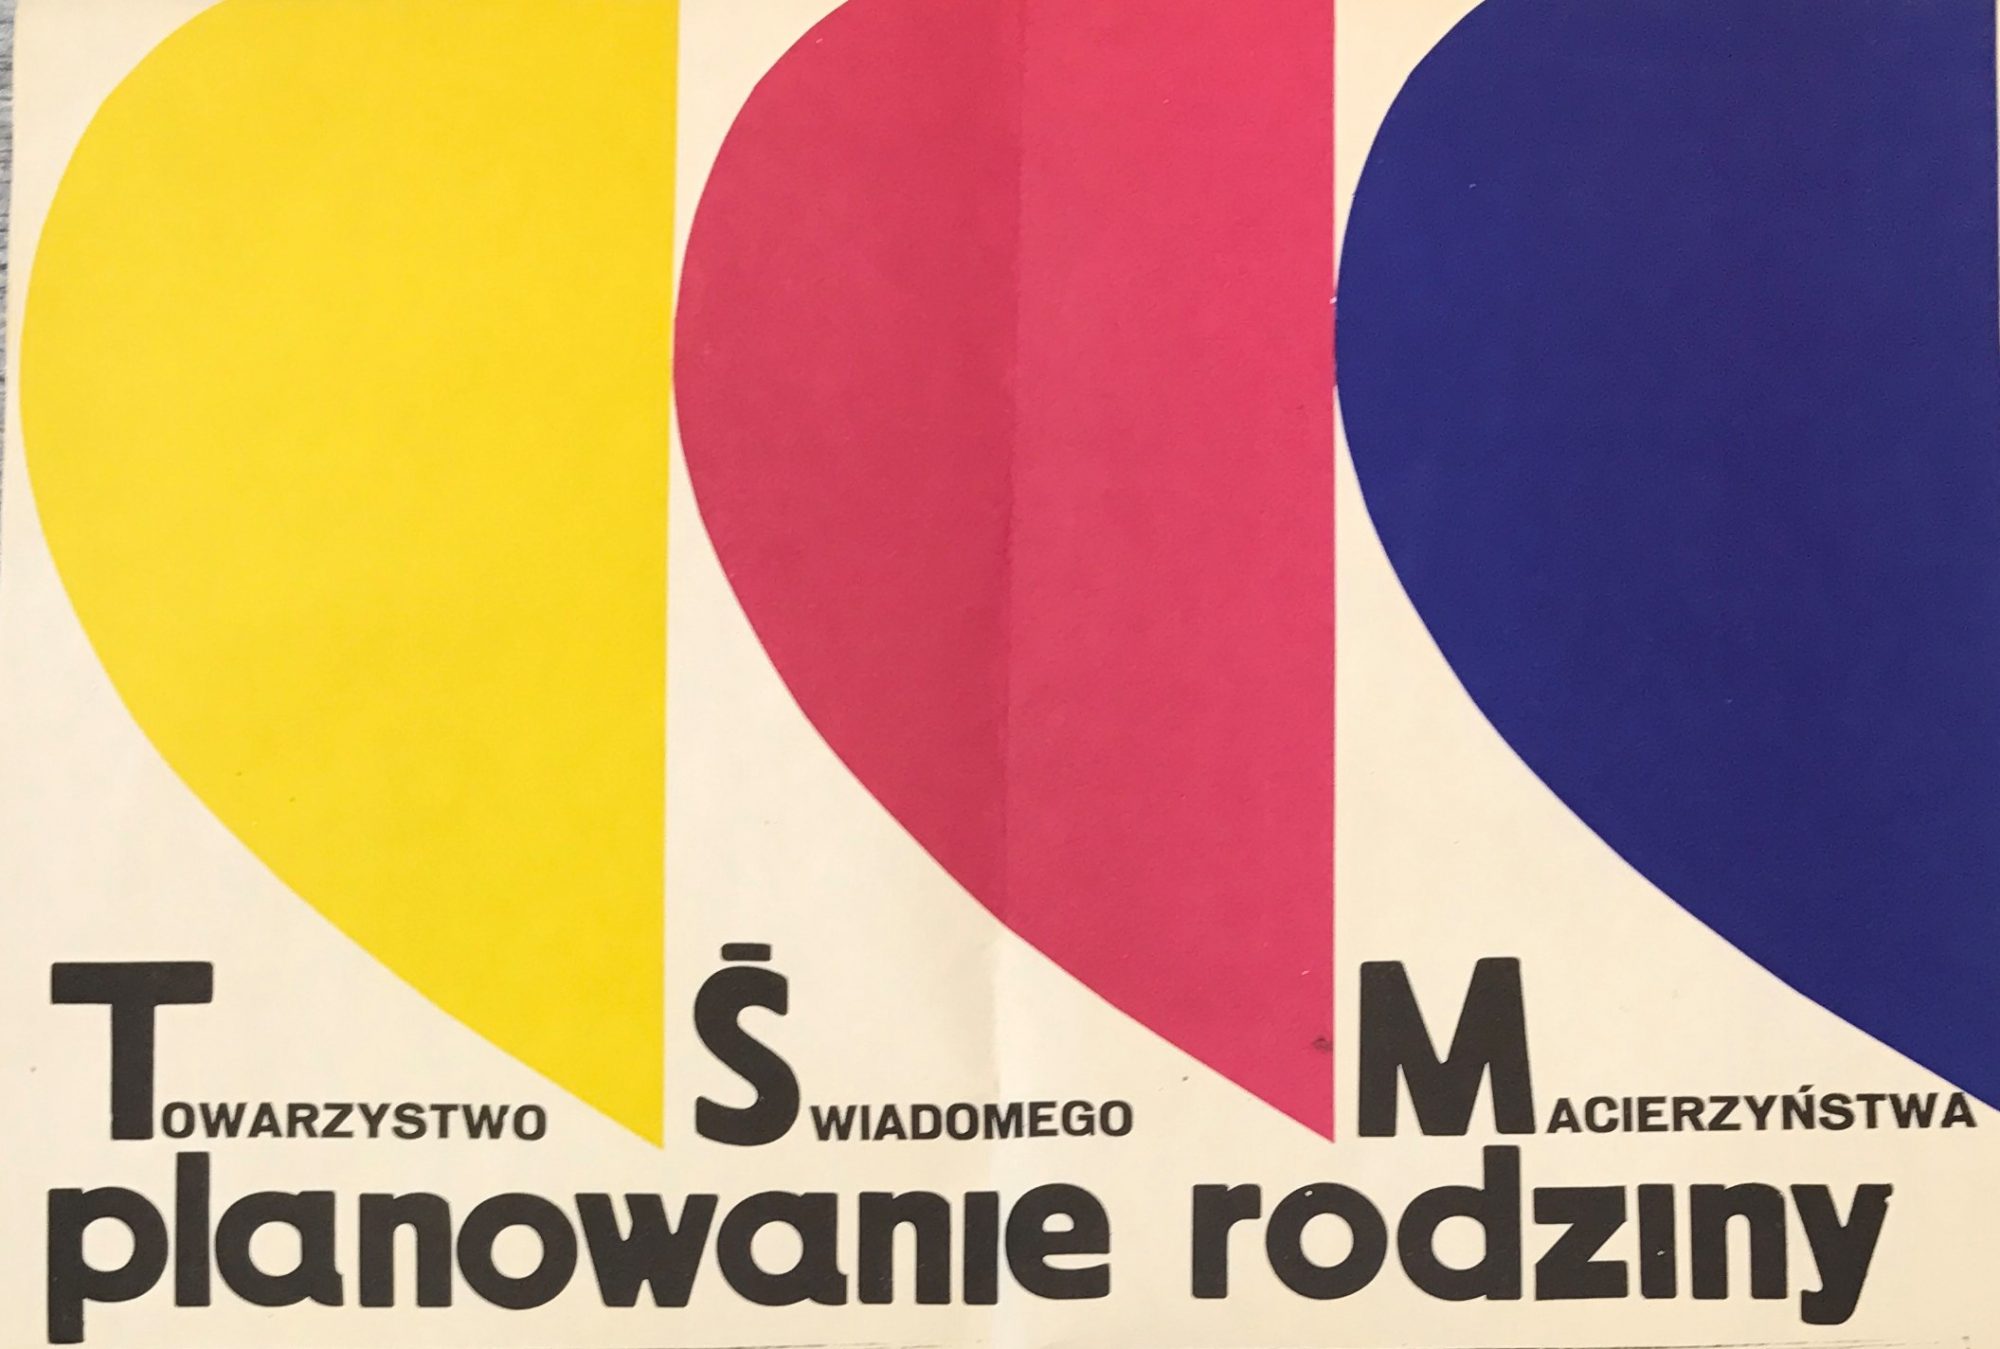 Birth Control Cultures in Poland, 1945 – 1989